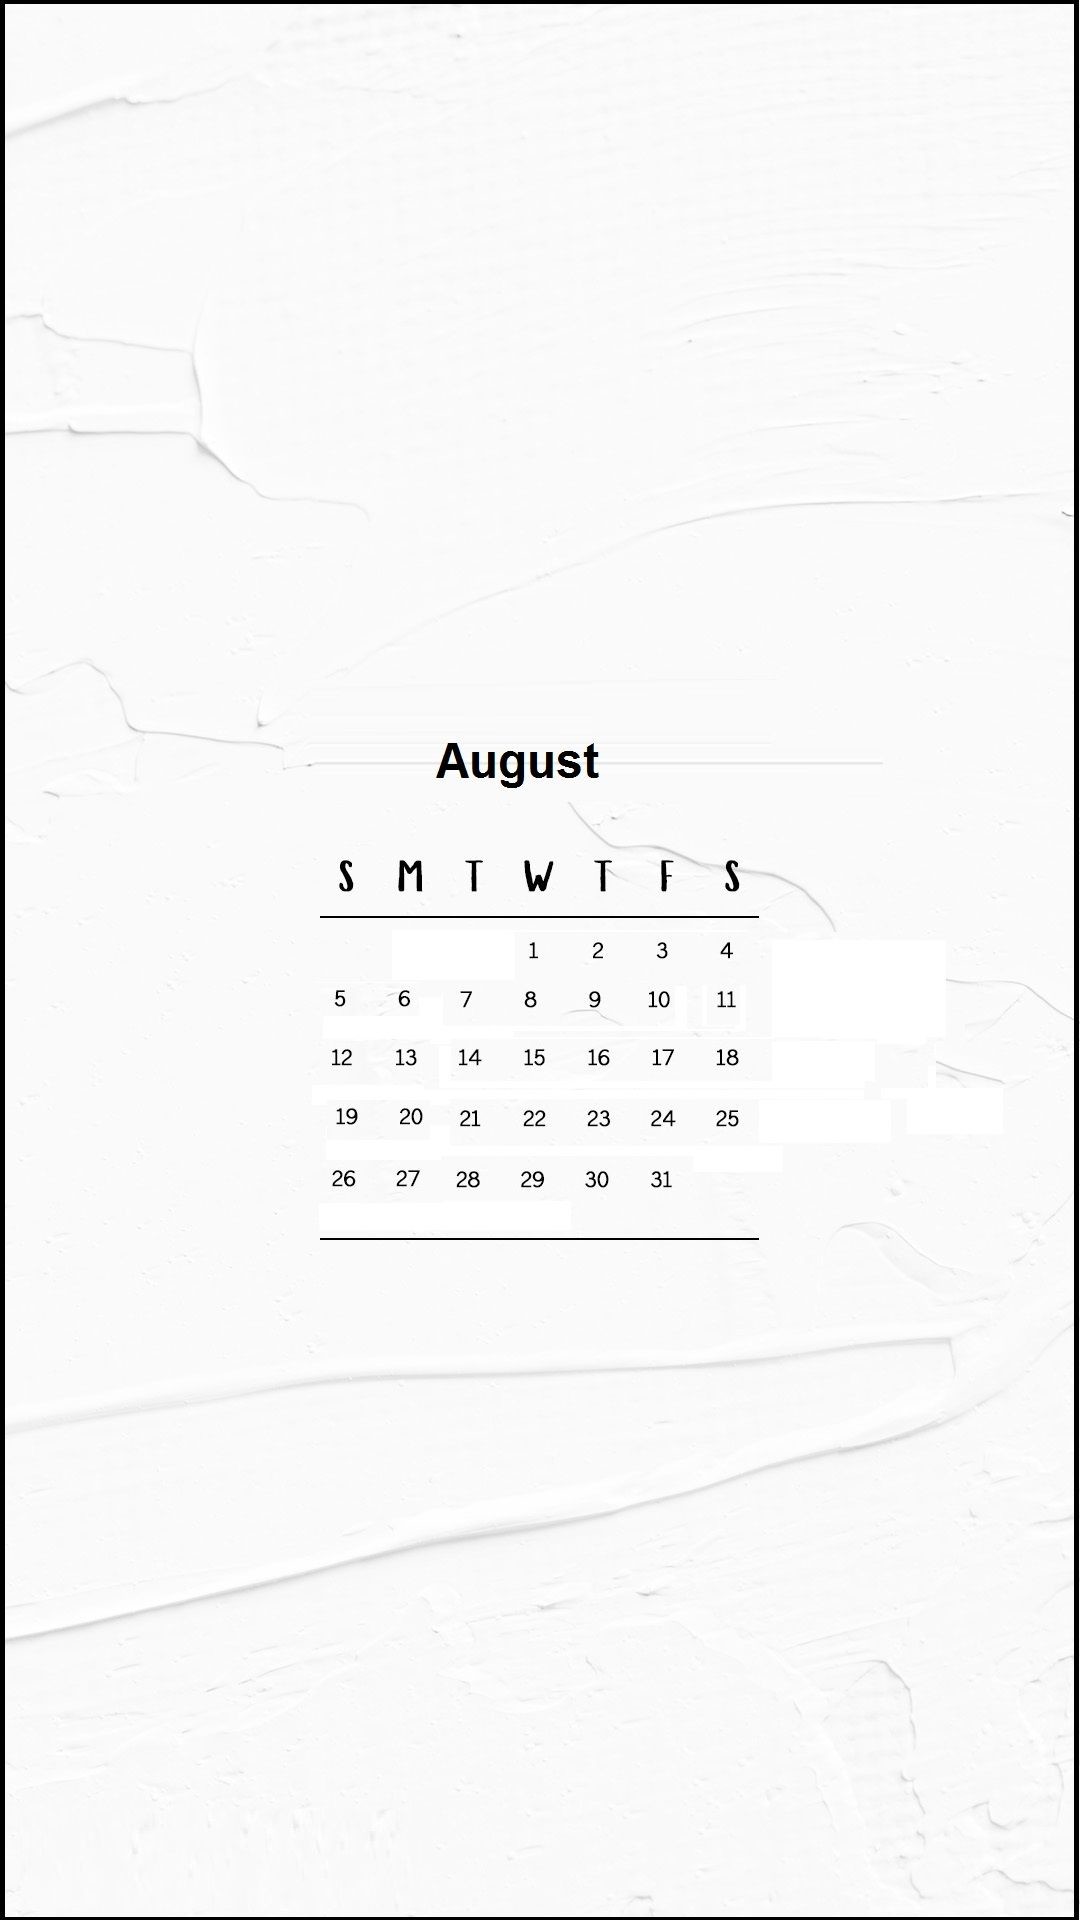 1080x1920 August 2018 iPhone Calendar Wallpapers August Wallpaper, Calendar Wallpaper,  Wallpaper Desktop, Wallpaper Backgrounds